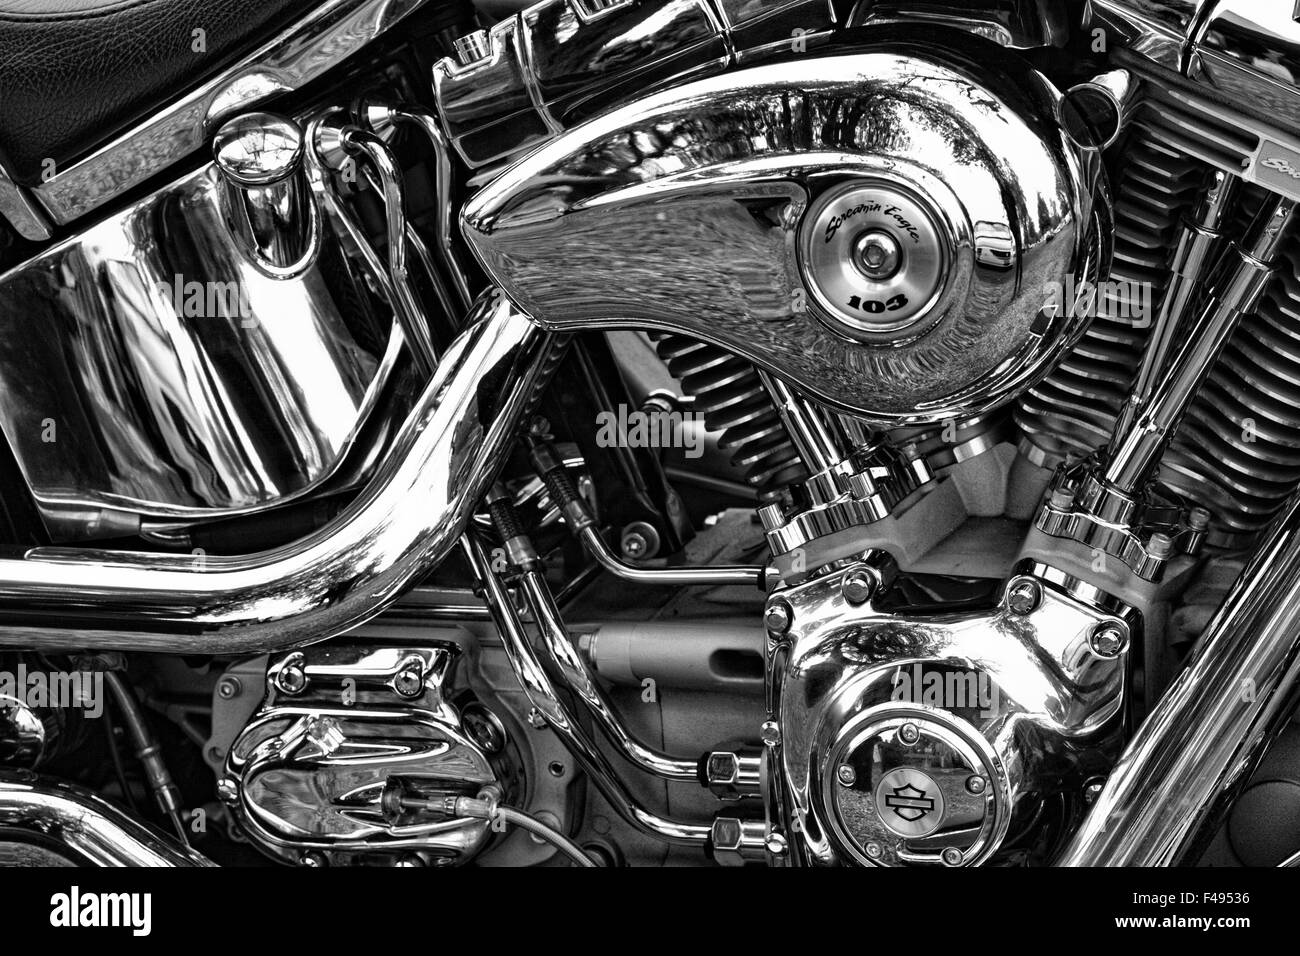 Engine of a Harley Davidson custom built motorcycle Stock Photo